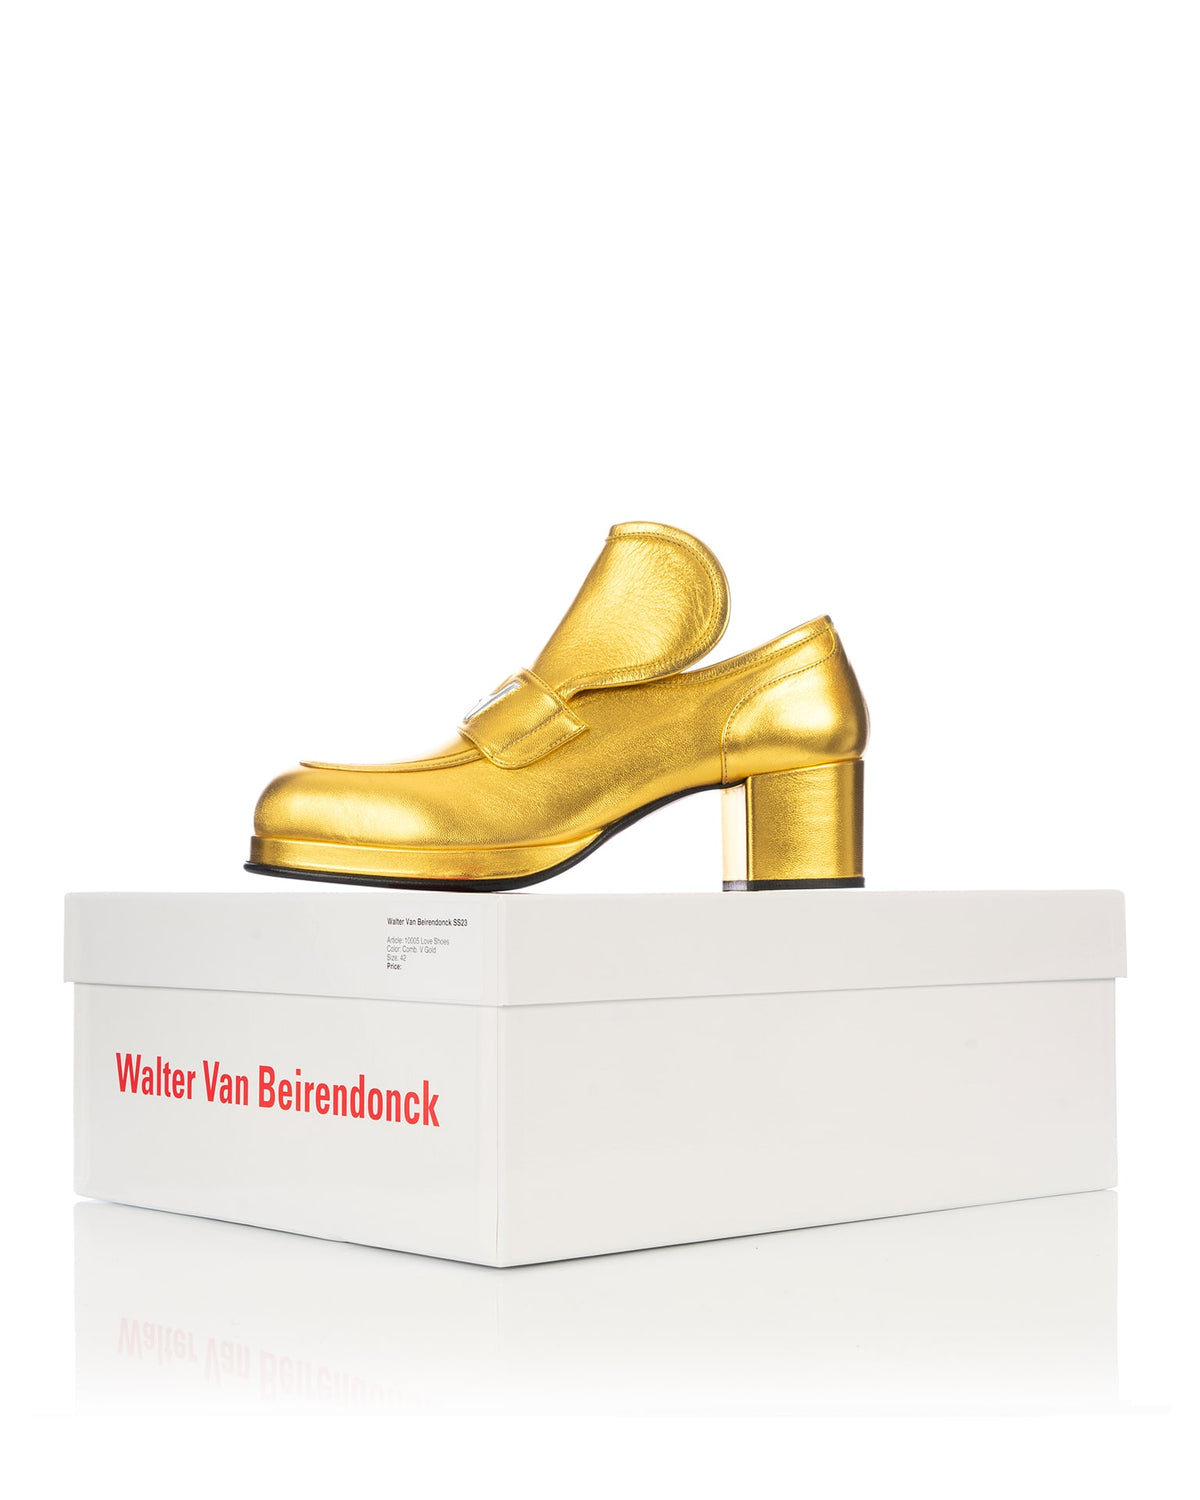 Walter Van Beirendonck | Love Shoes Gold - Concrete